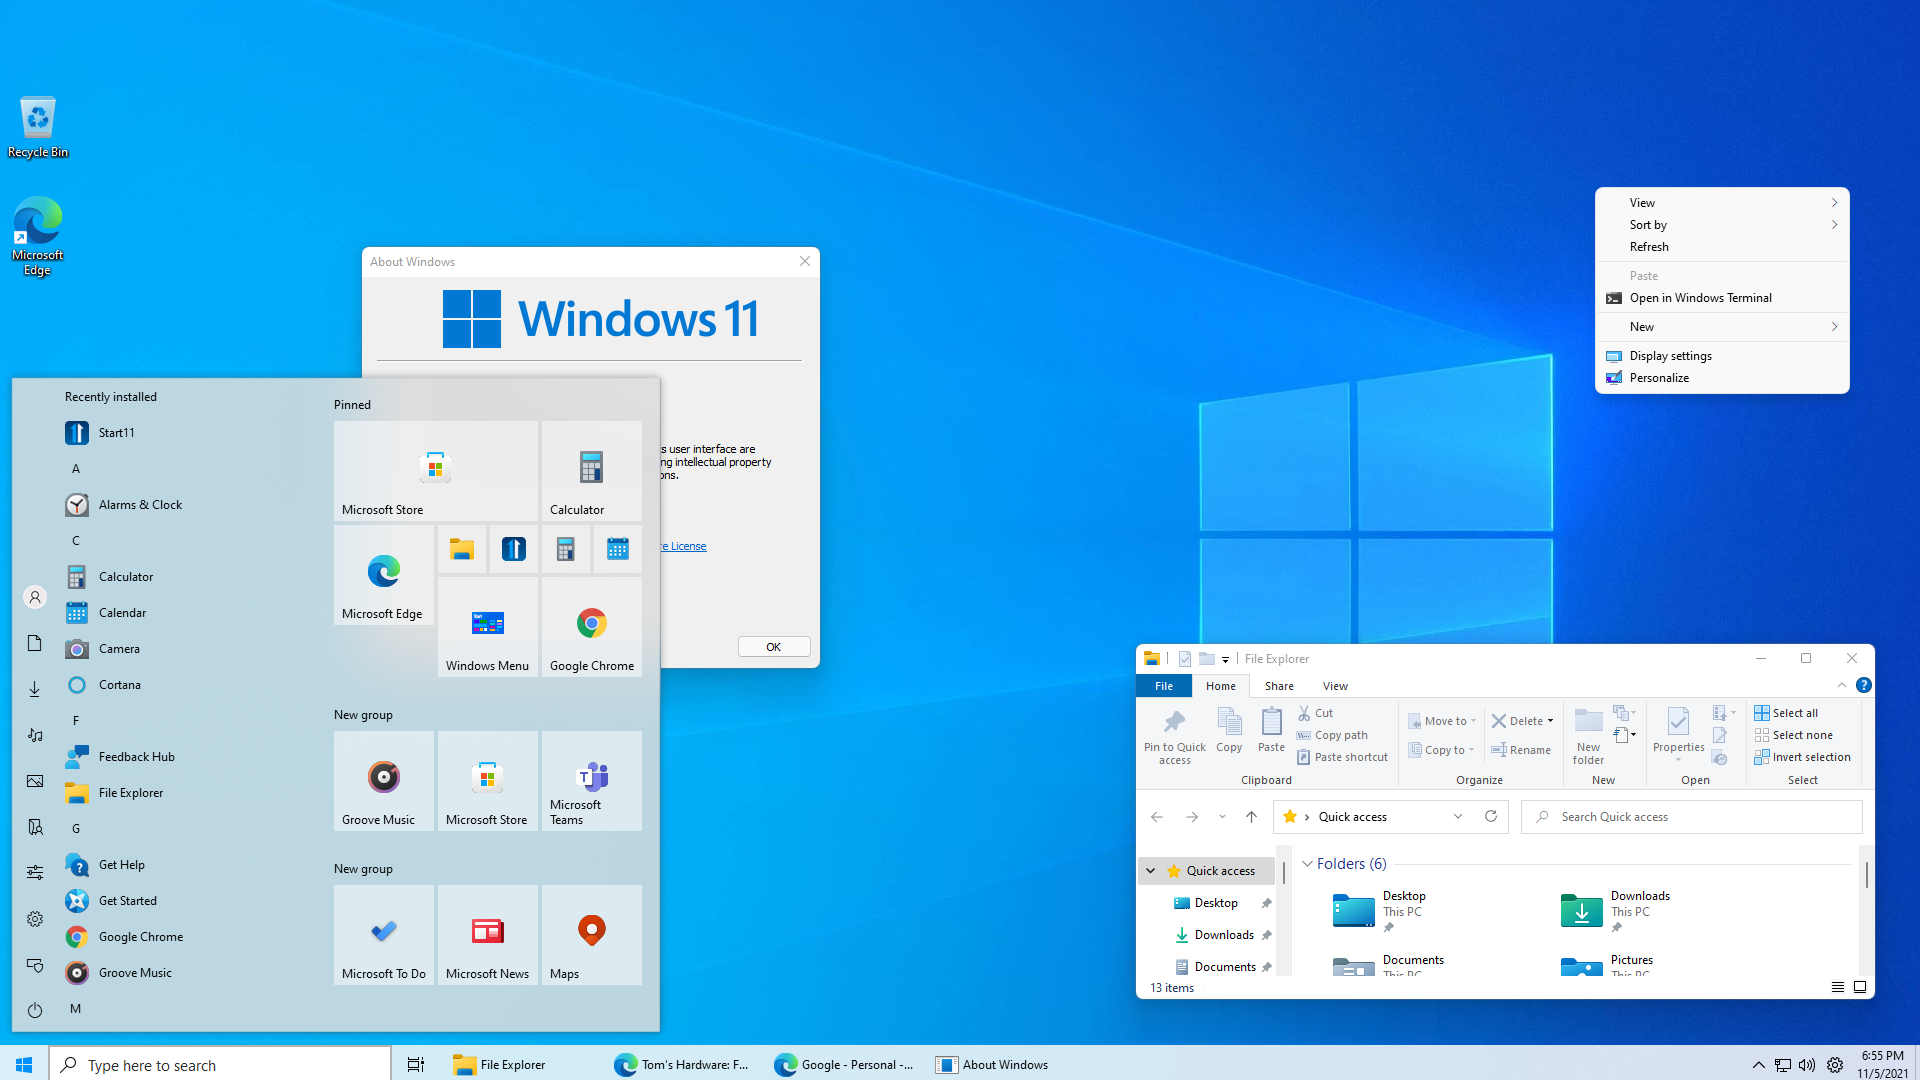 How to Make Windows 11 Look Like Windows 10?